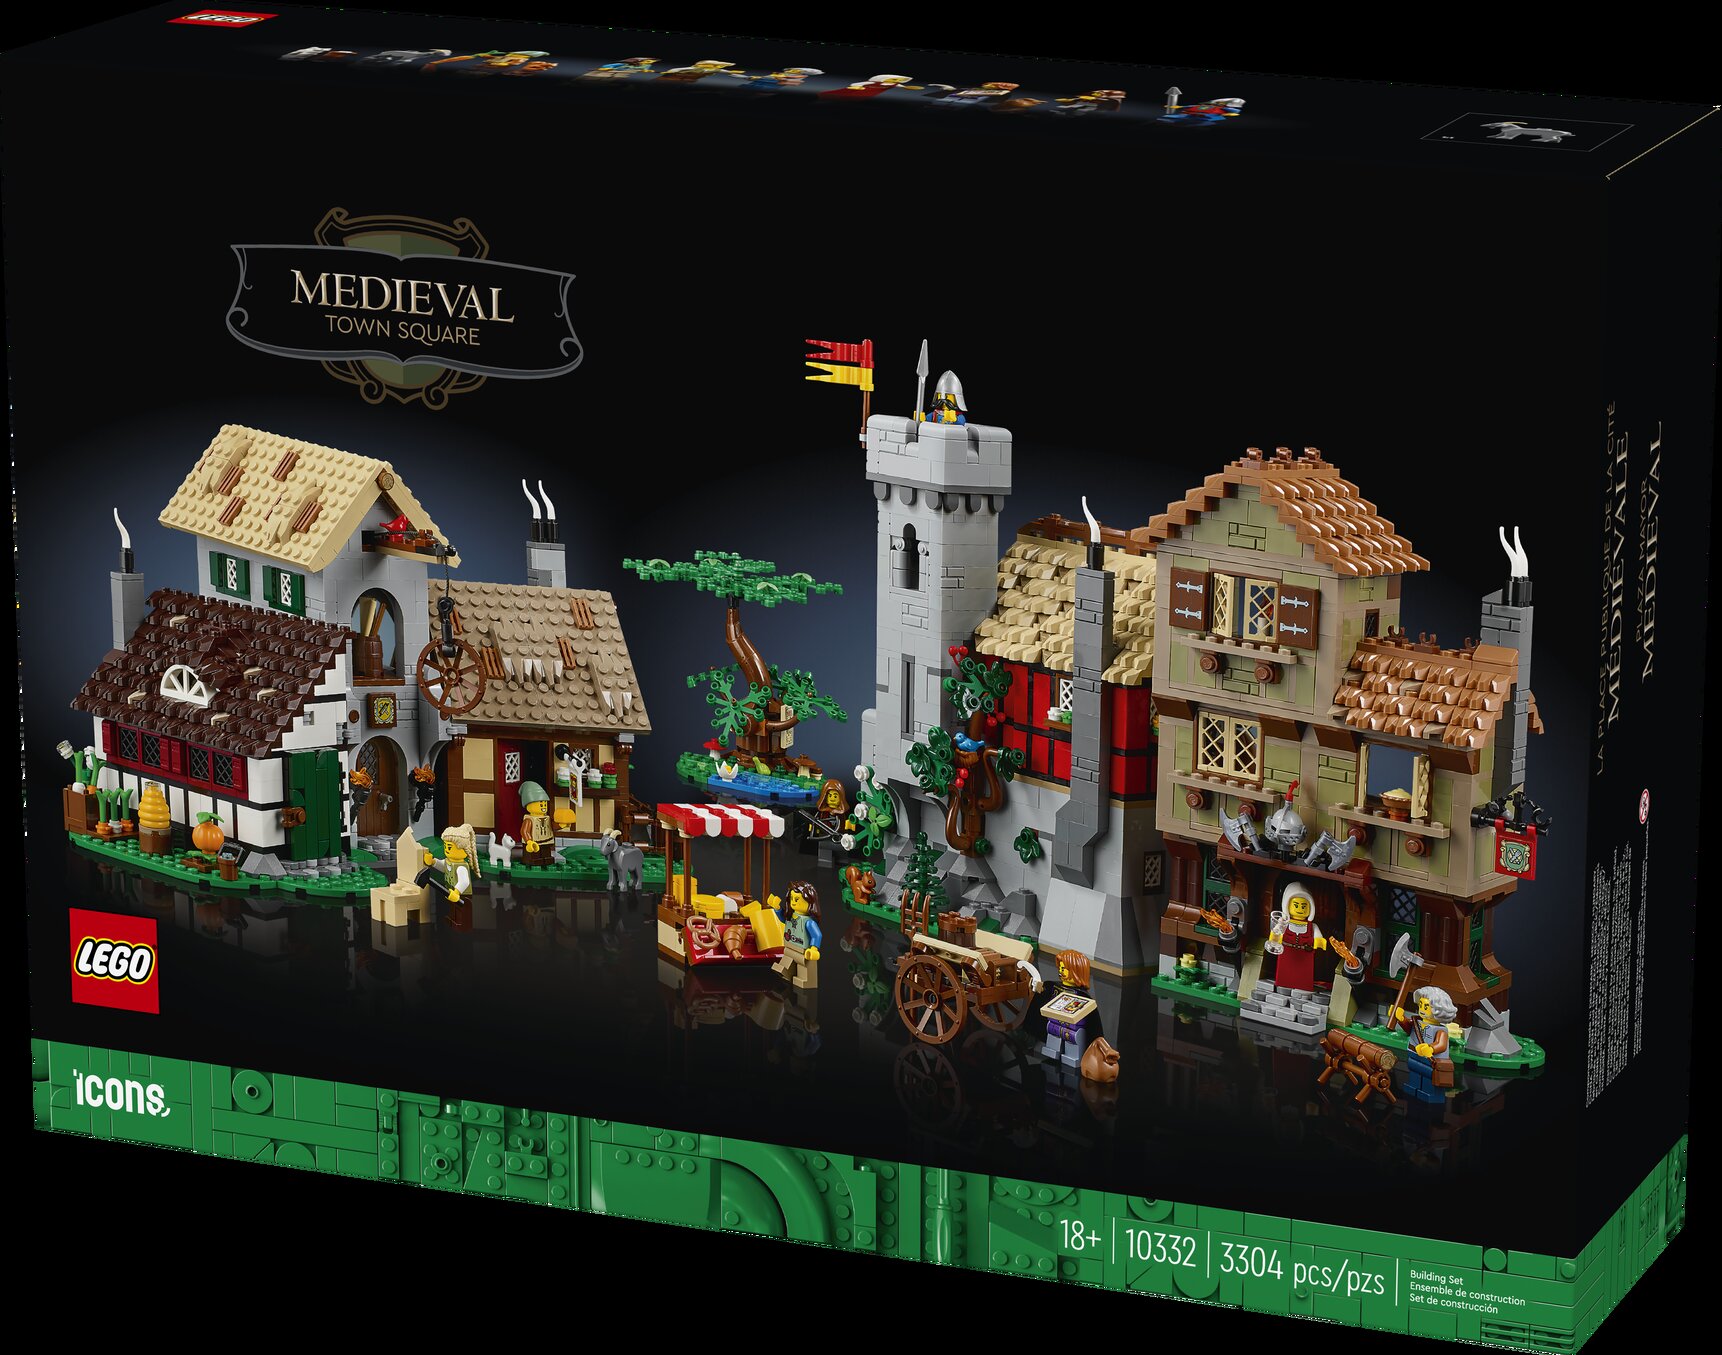 LEGO unveils ‘Medieval Town Square’ set